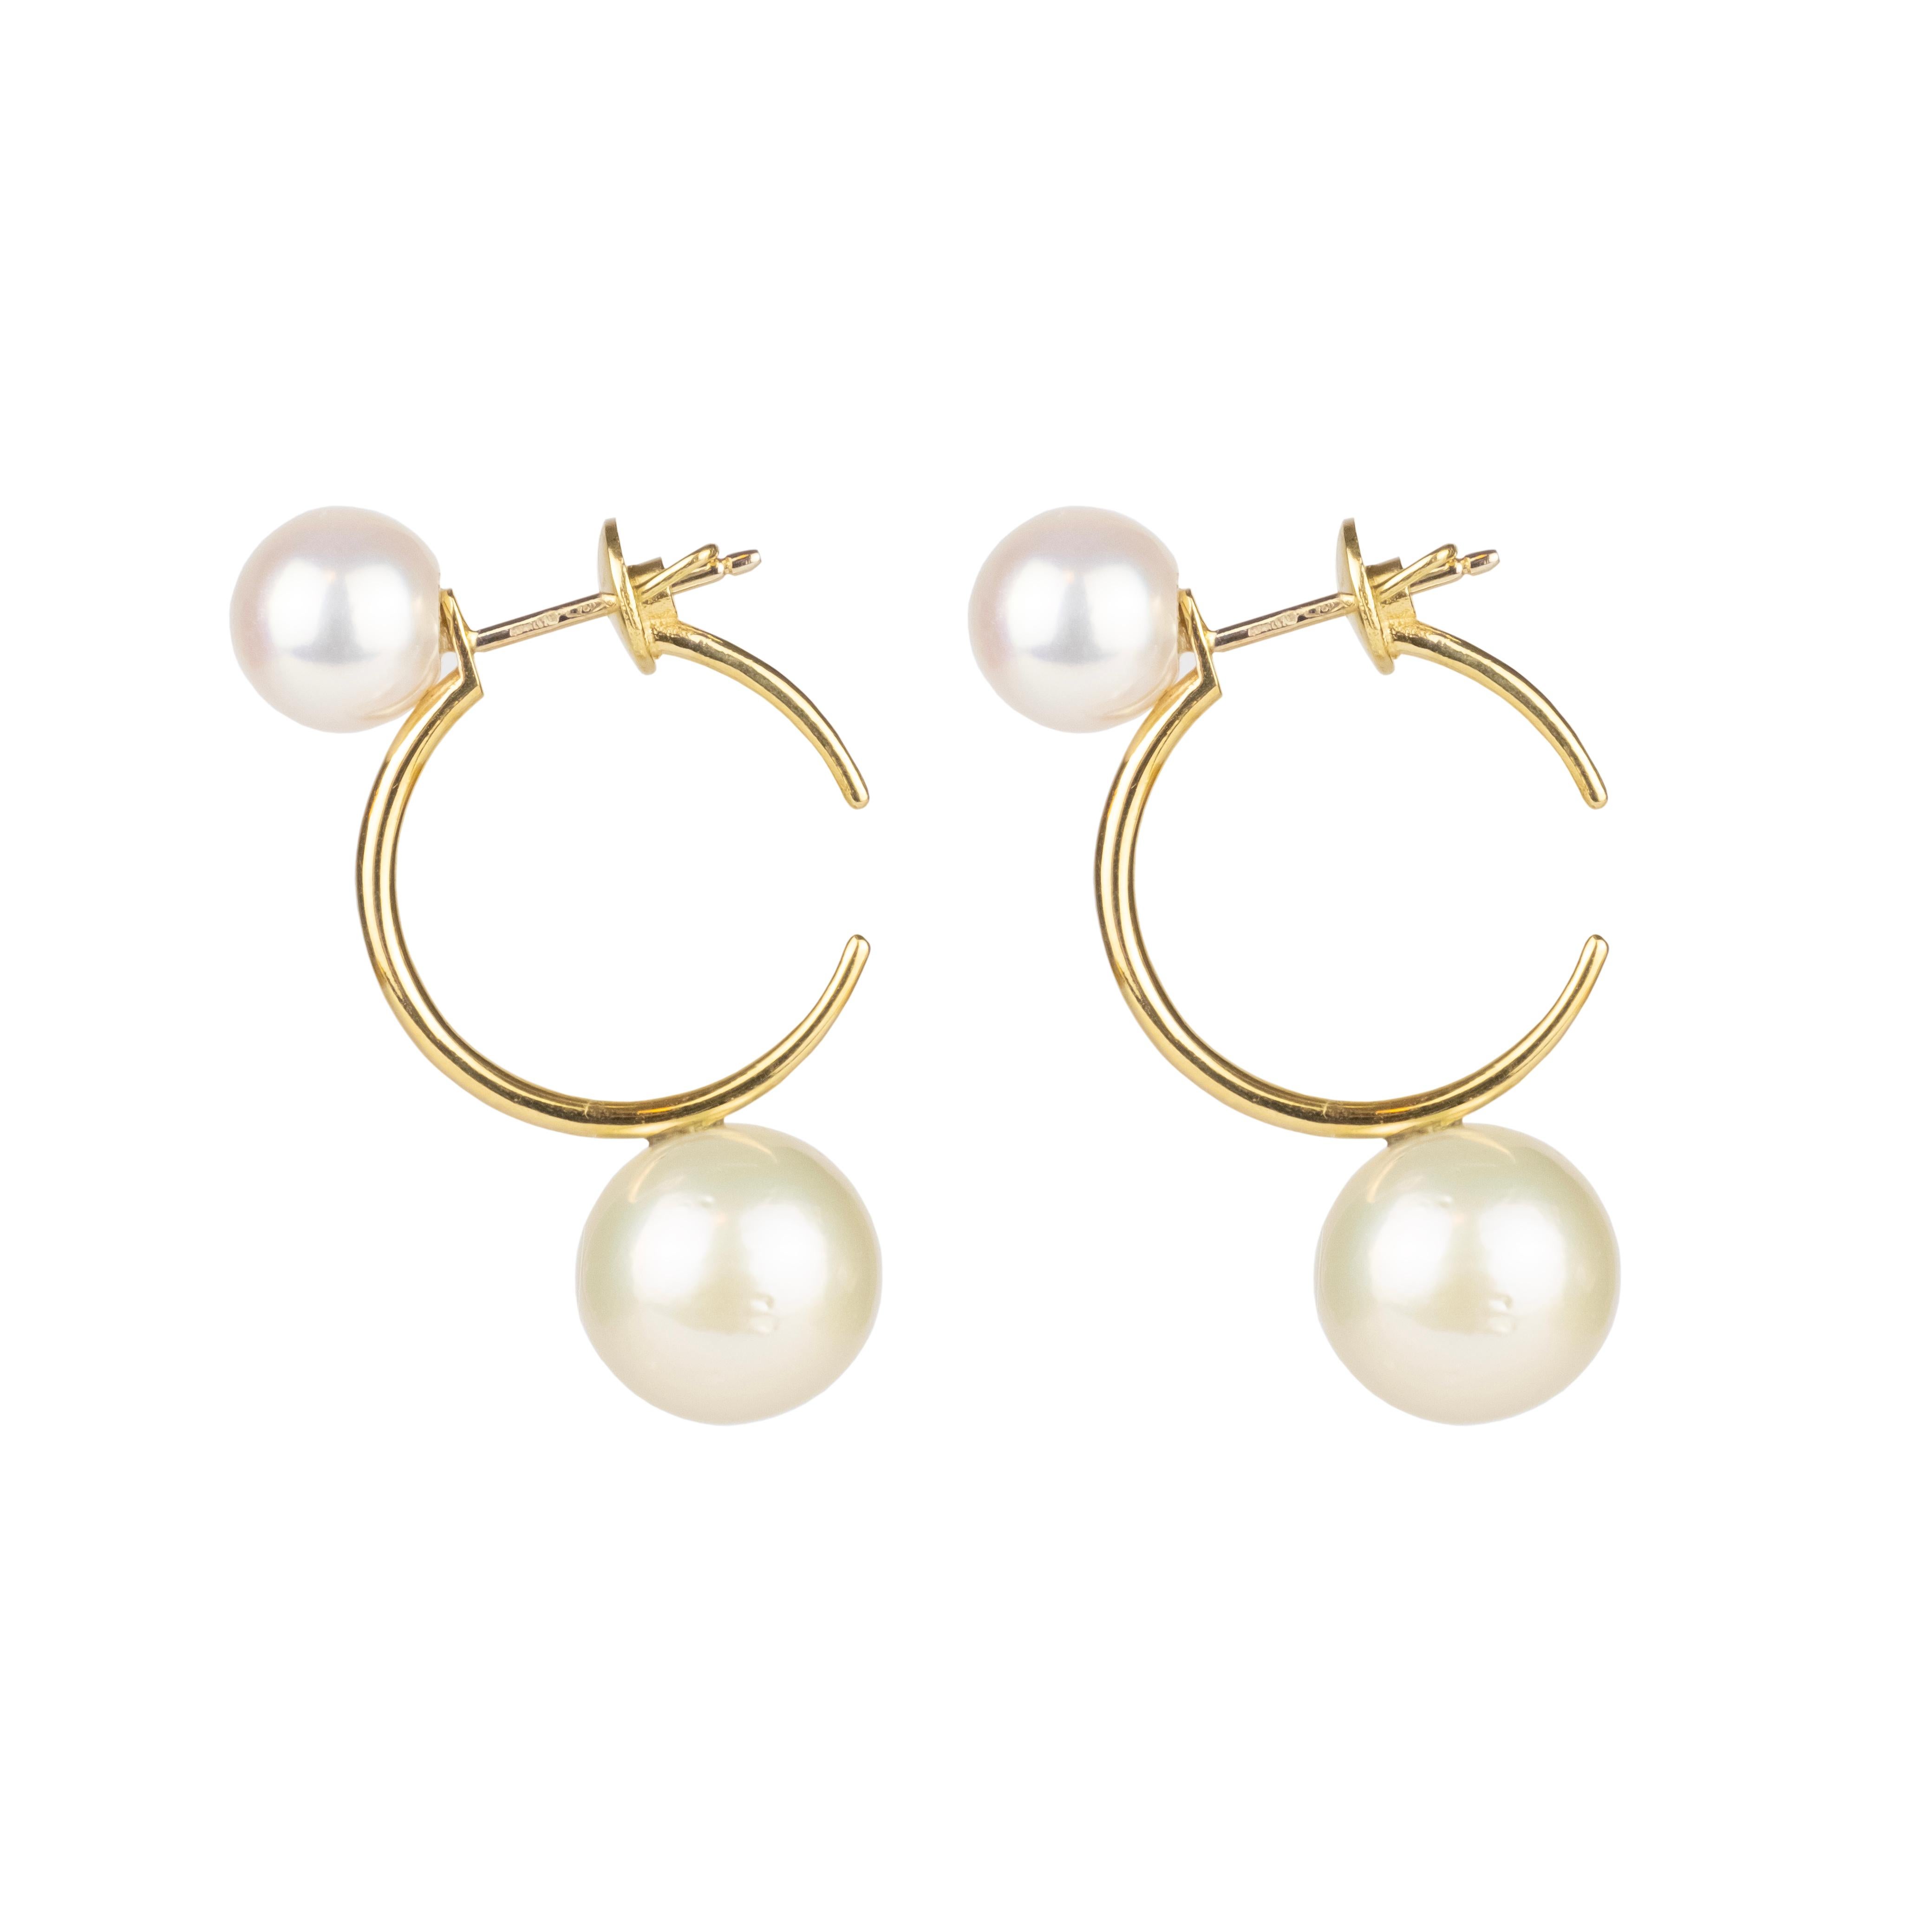 Brilliant Cut Regina Gambatesa White Pearls and Gold Half Circle Earrings For Sale